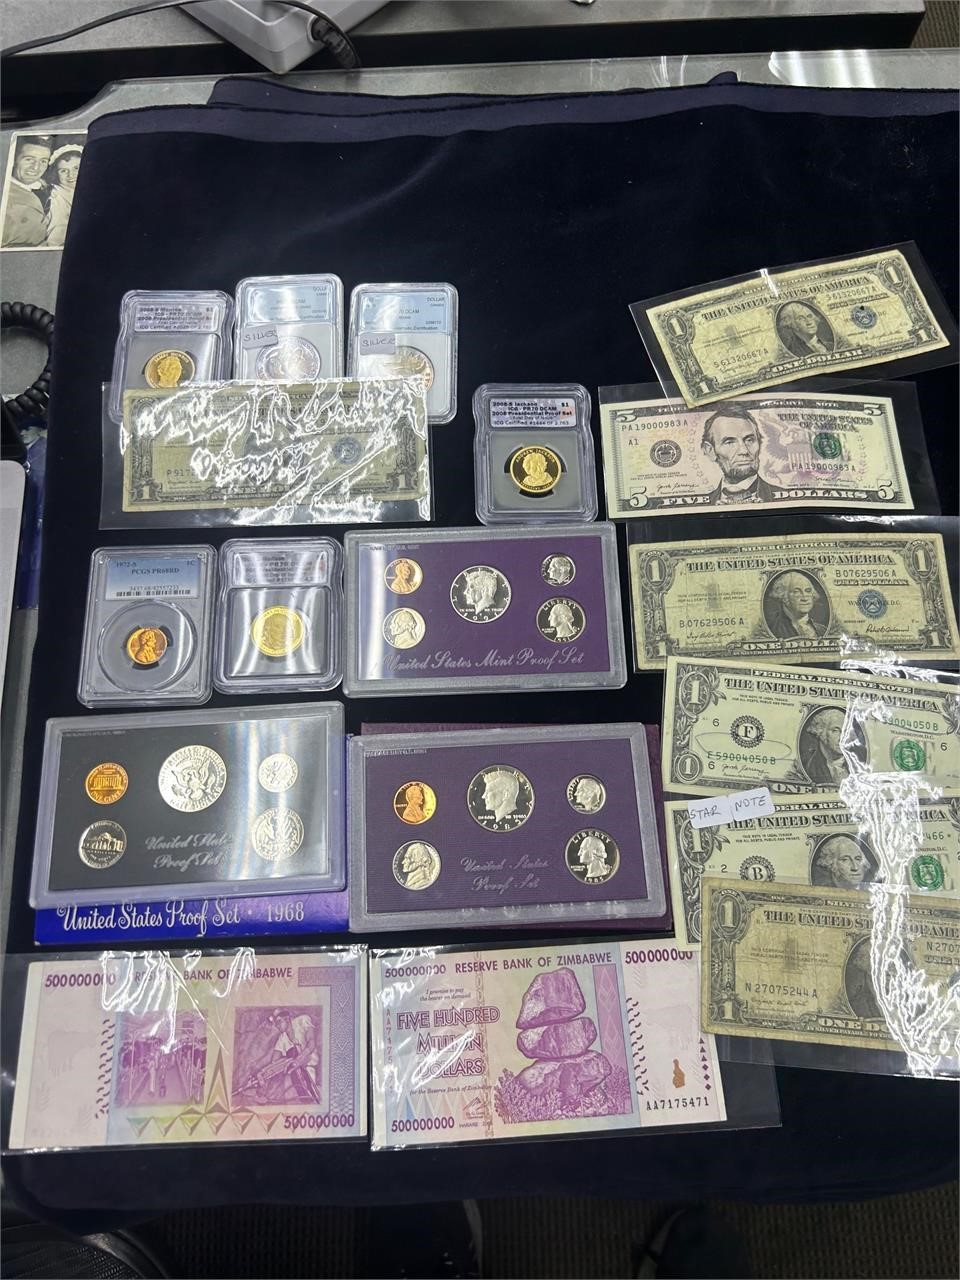 Kennedy Half Dollar Silver Certificates Coins etc